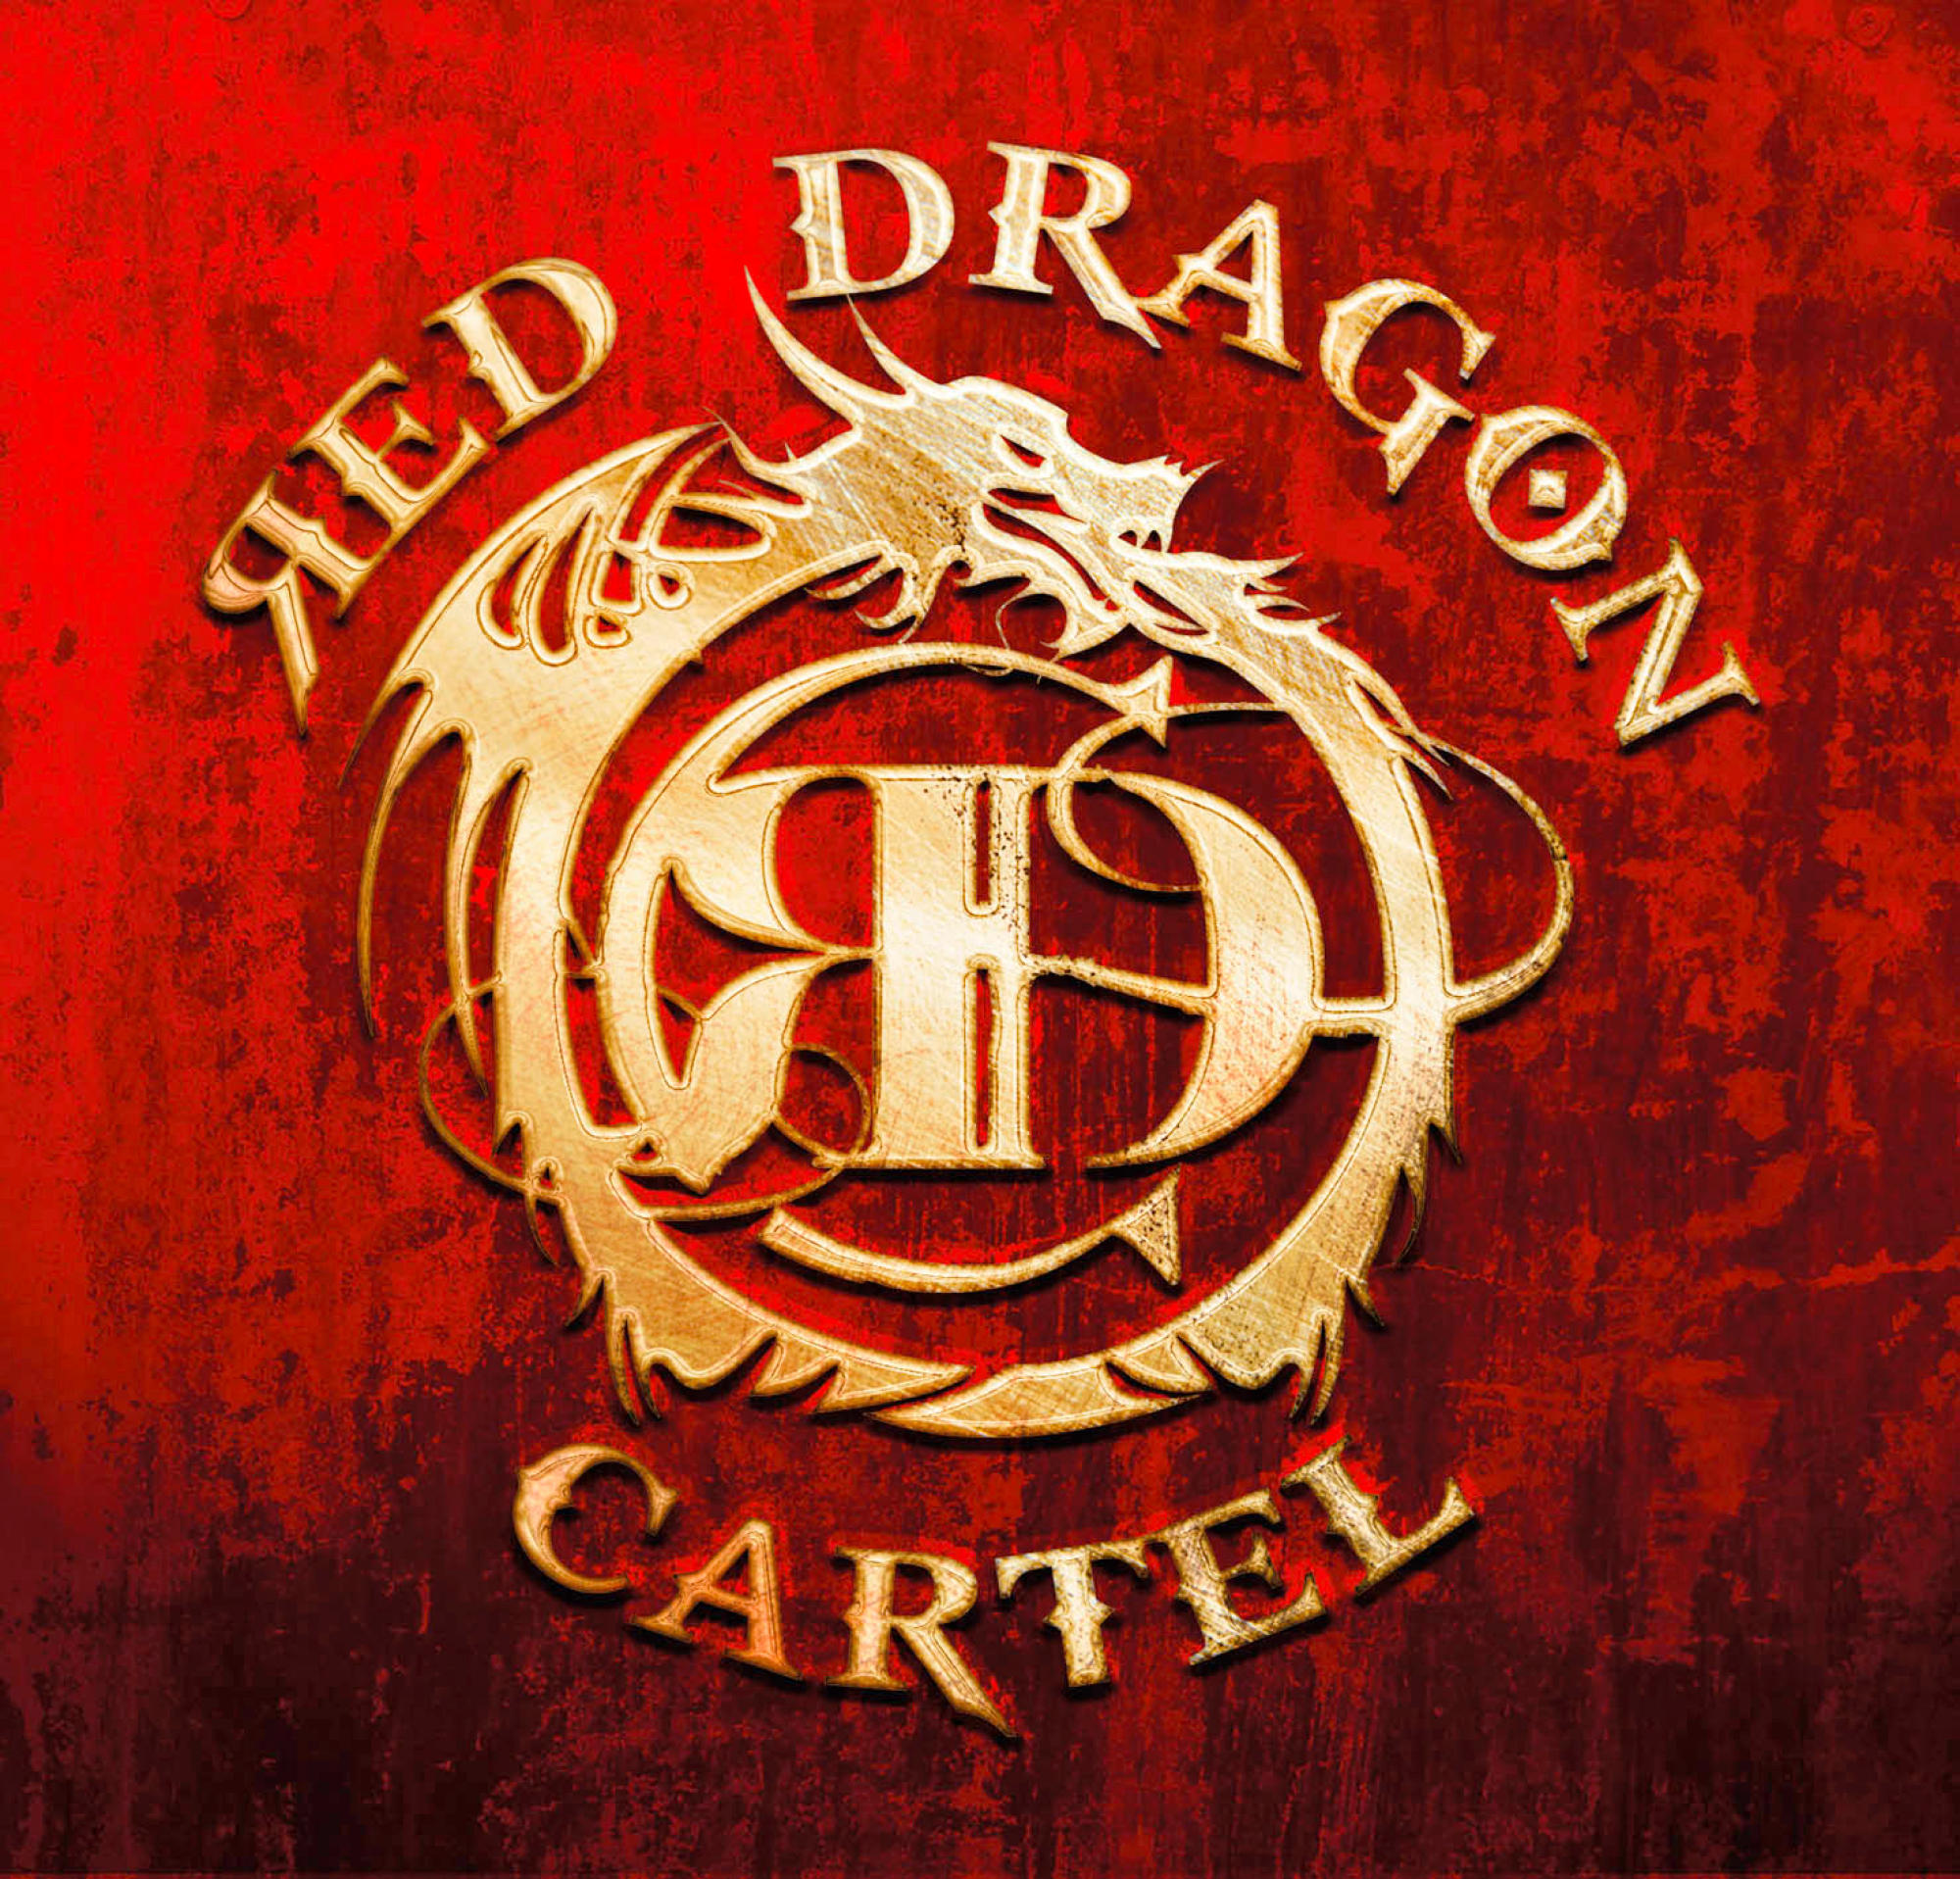 Red Dragon Cartel - Cartel - (CD) Red Dragon